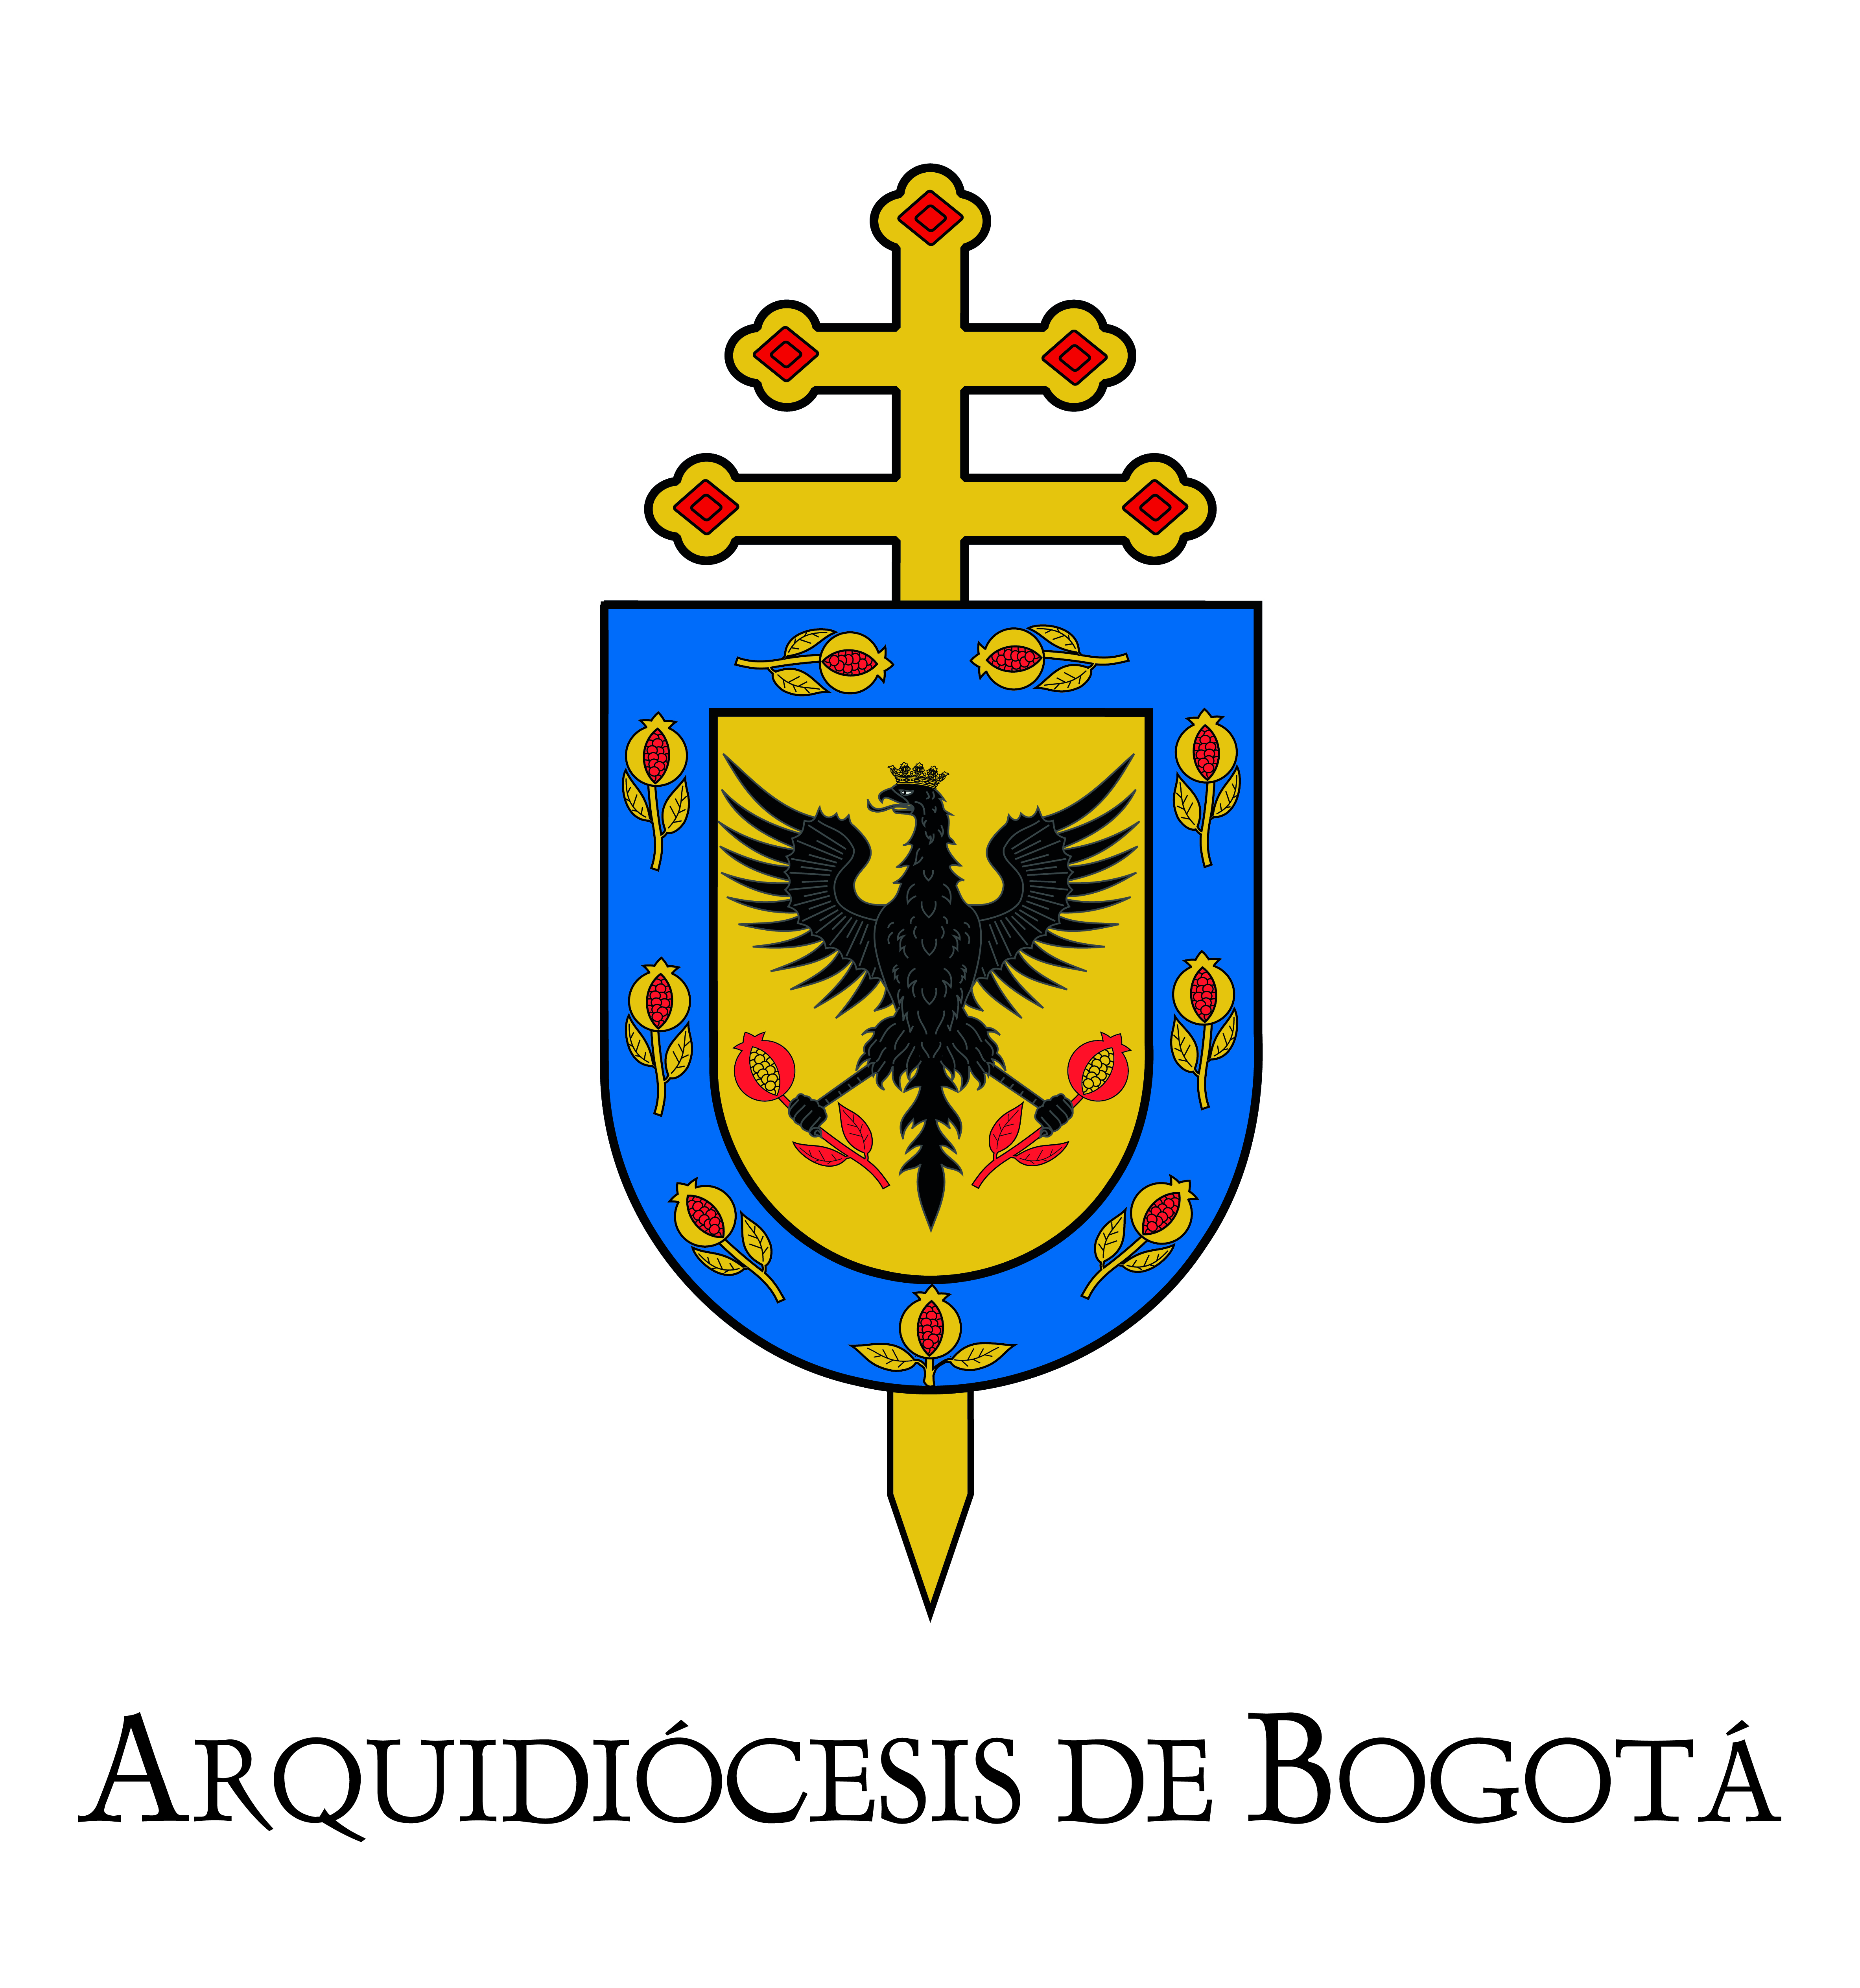 https://arquimedia.s3.amazonaws.com/2/mayo-2016/escudo-arquidiocesis-a-colorjpg.jpg